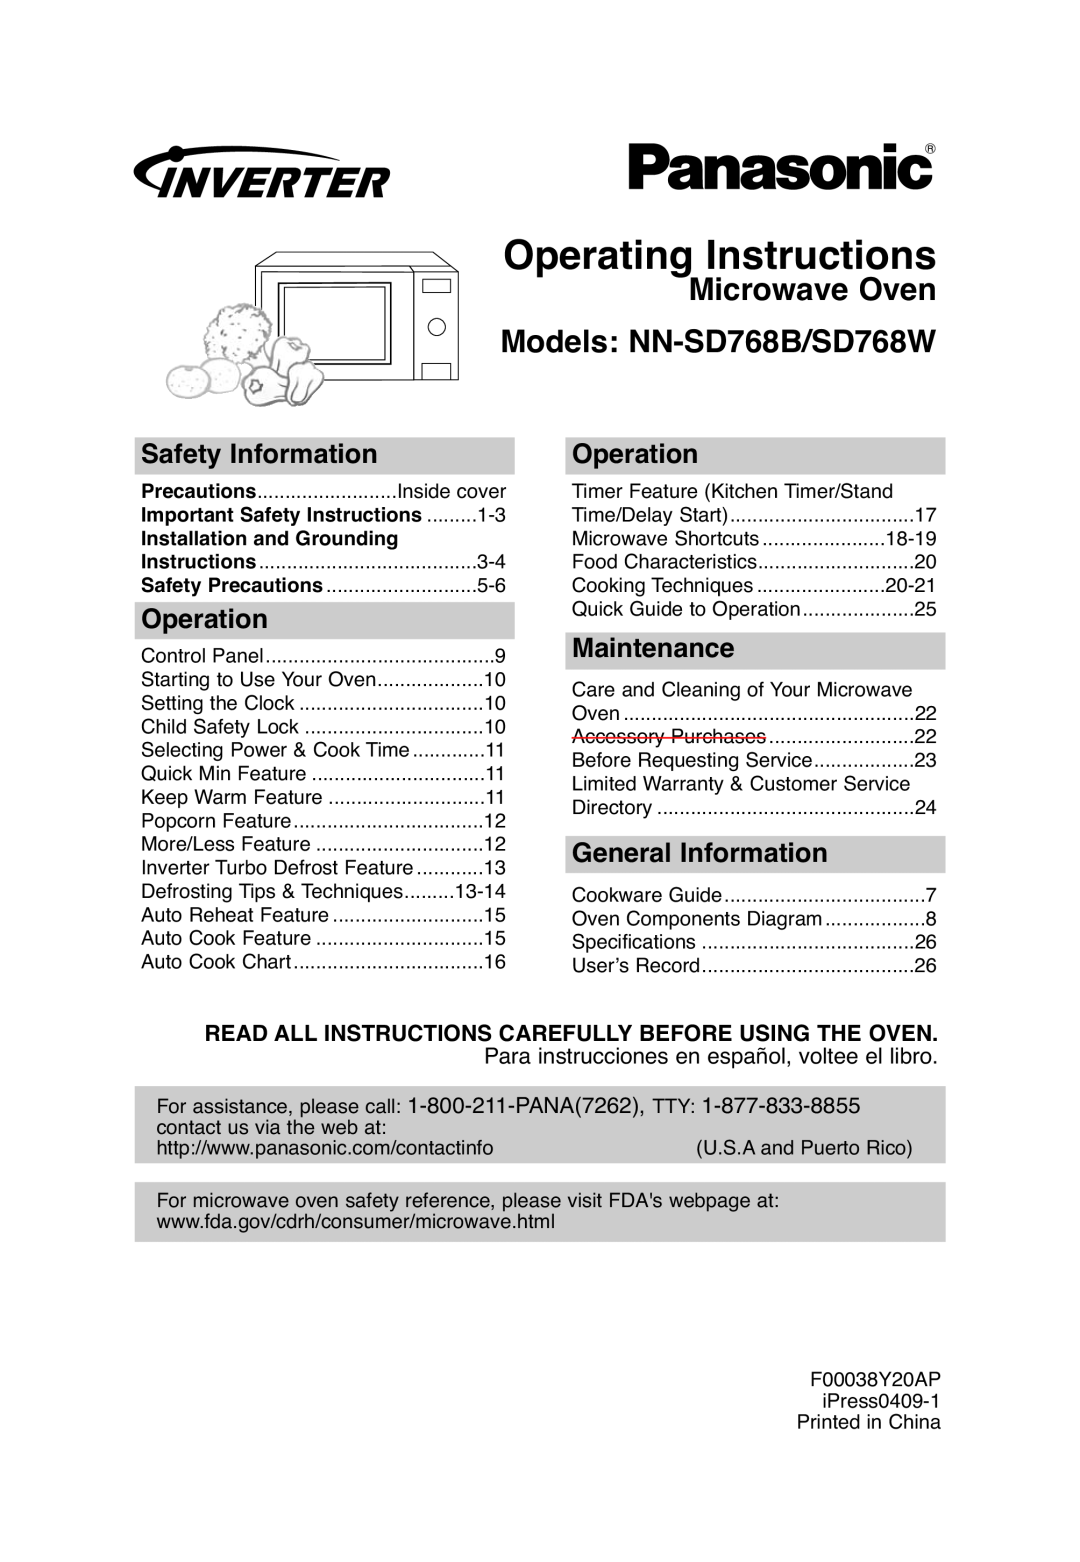 Panasonic NN-SD768W operating instructions Operating Instructions, Microwave Oven Models NN-SD768B/SD768W, Operation 